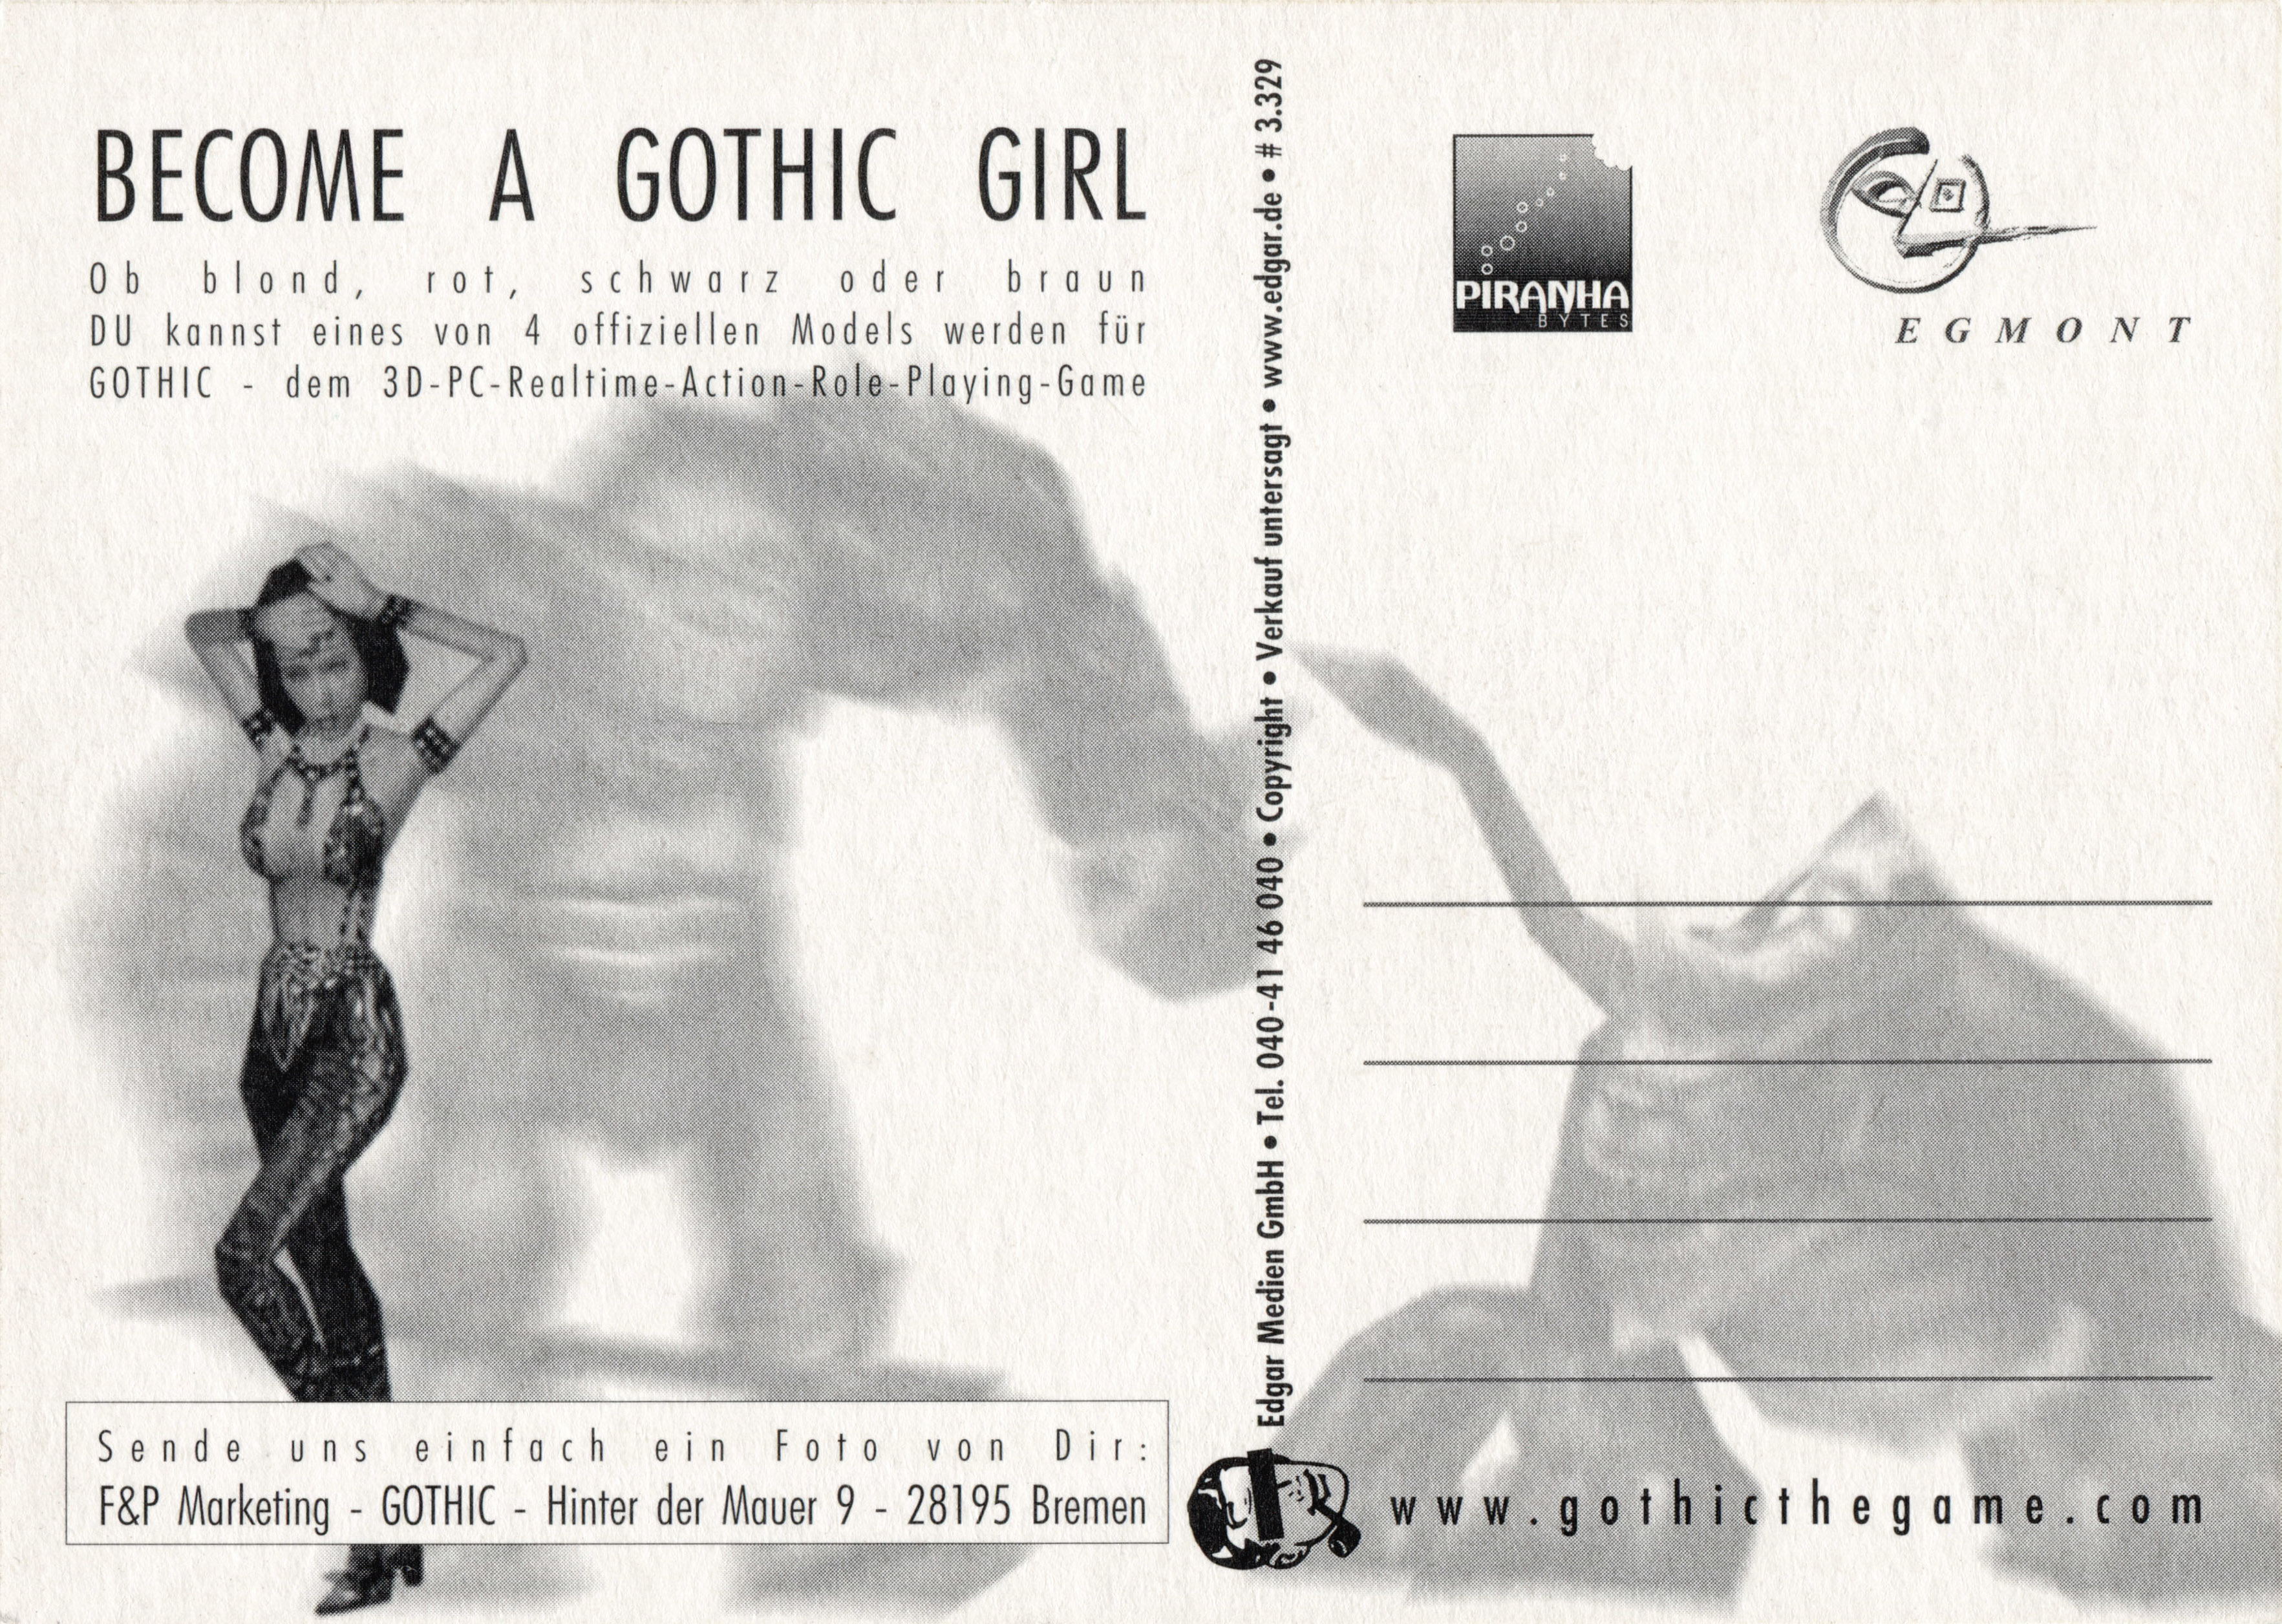 Edgar Karte Photo: 'Become a Gothic Girl No2' Rückseite